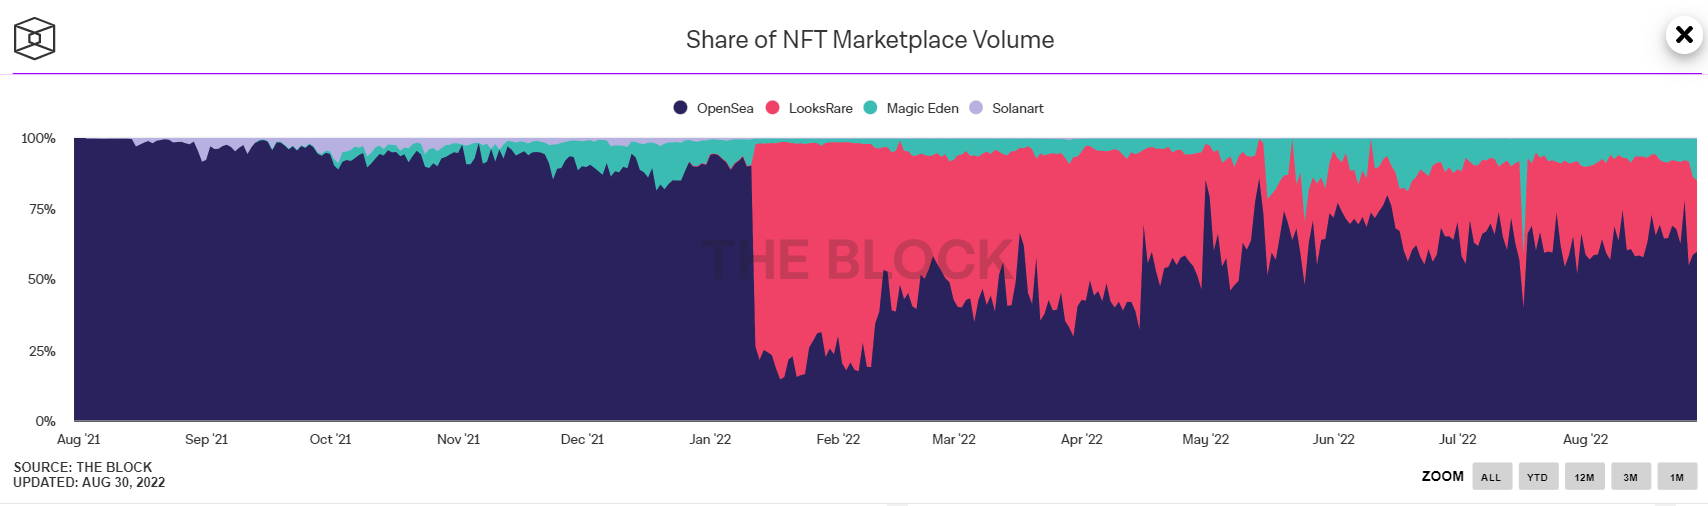 share of NFT Marketplace Volume